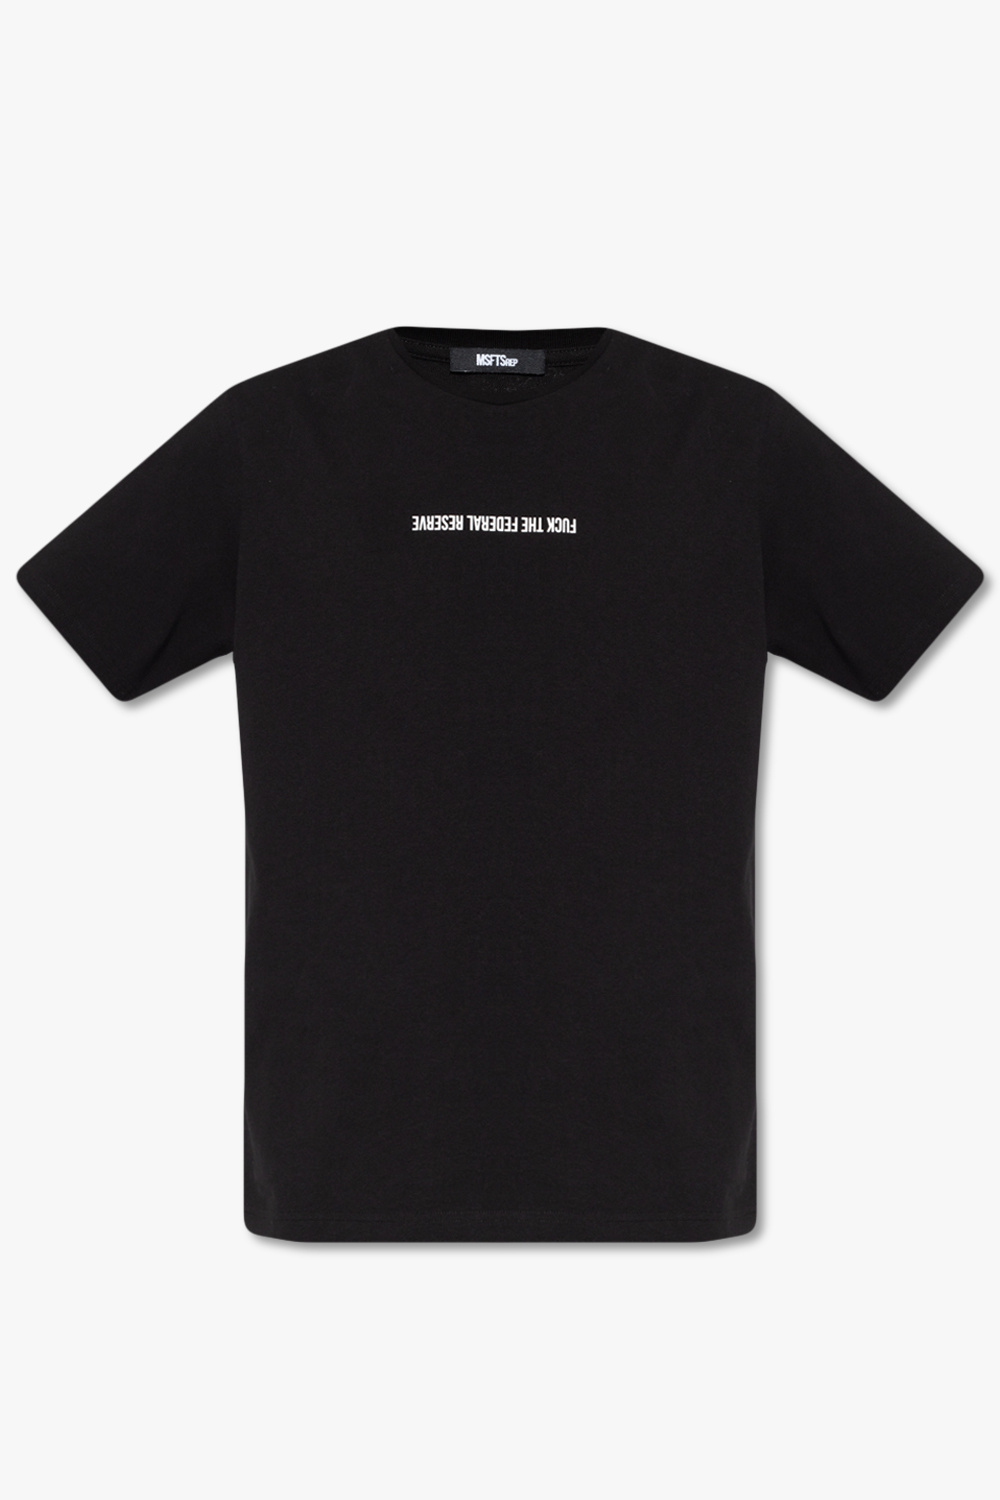 - McQueen StclaircomoShops - - Herzausschnitt Pullover shirt mit NC Black T MSFTSrep Printed Alexander Nude